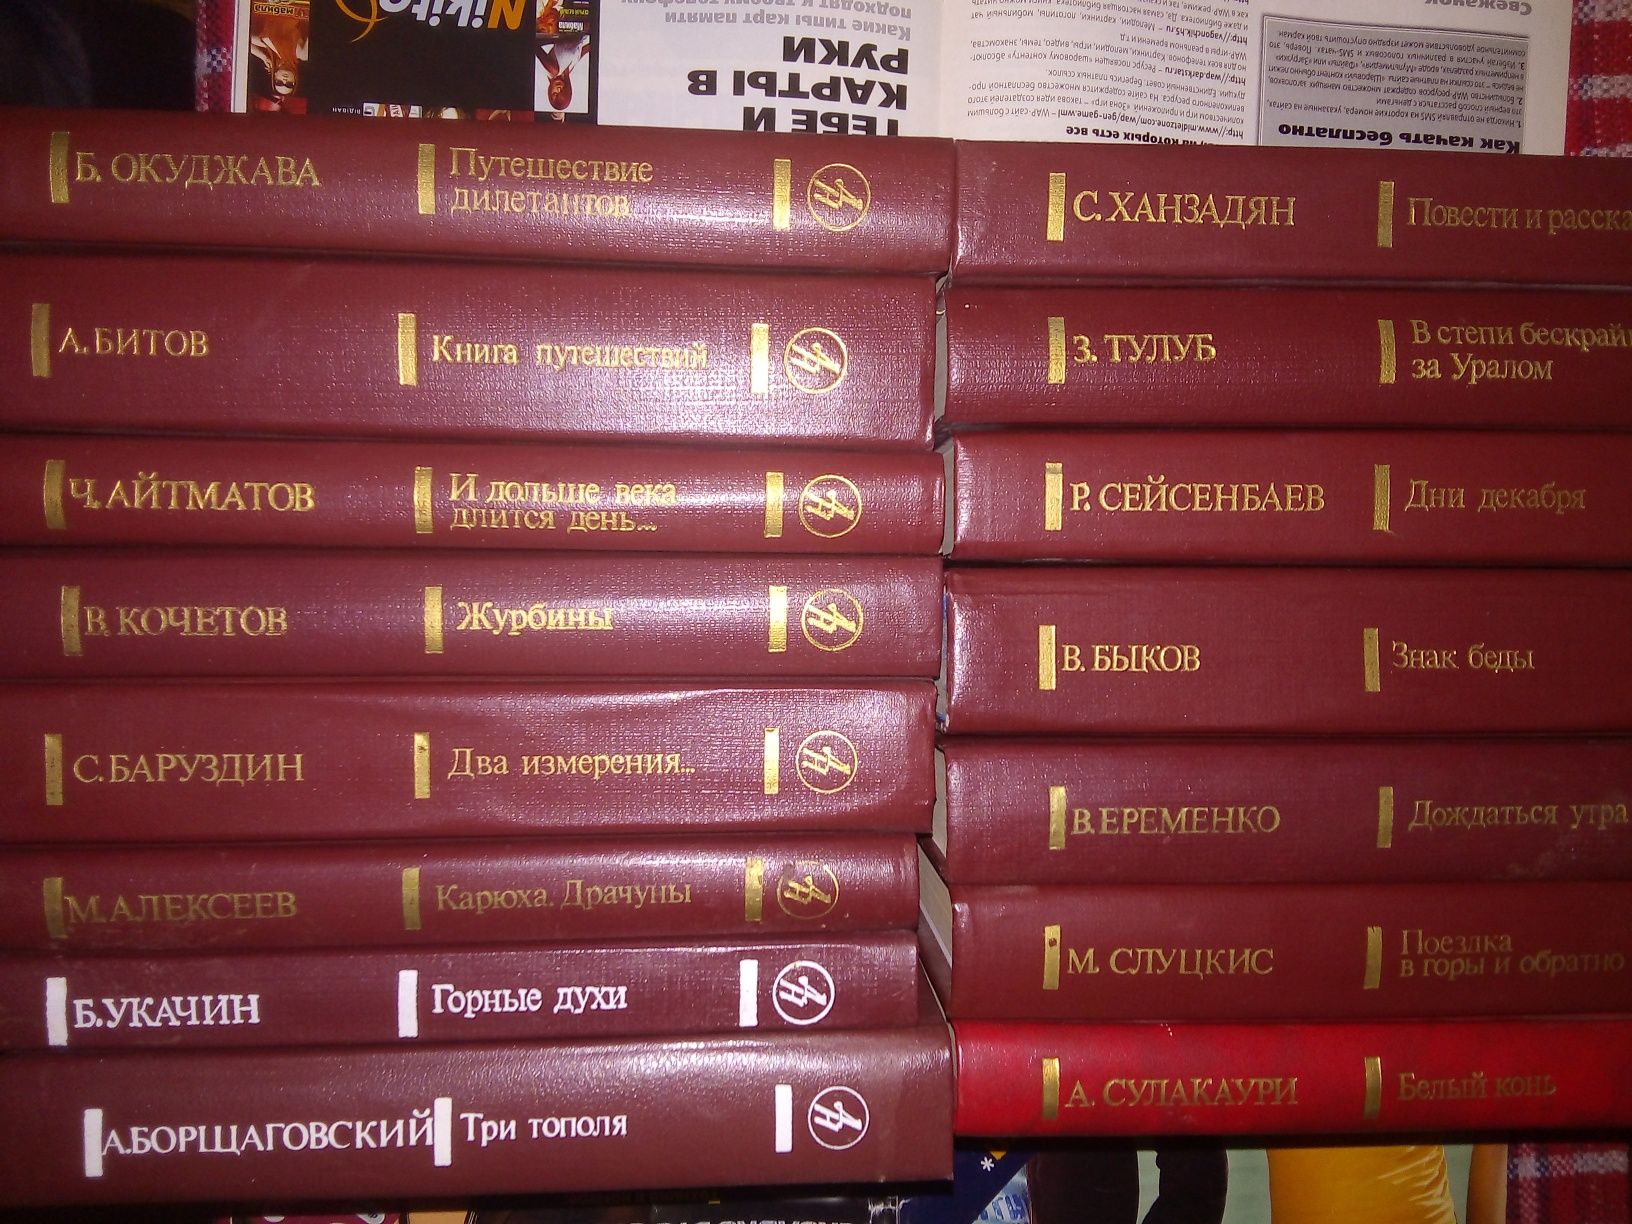 Дружба народов, библиотеки 1984,1985,1986гг.